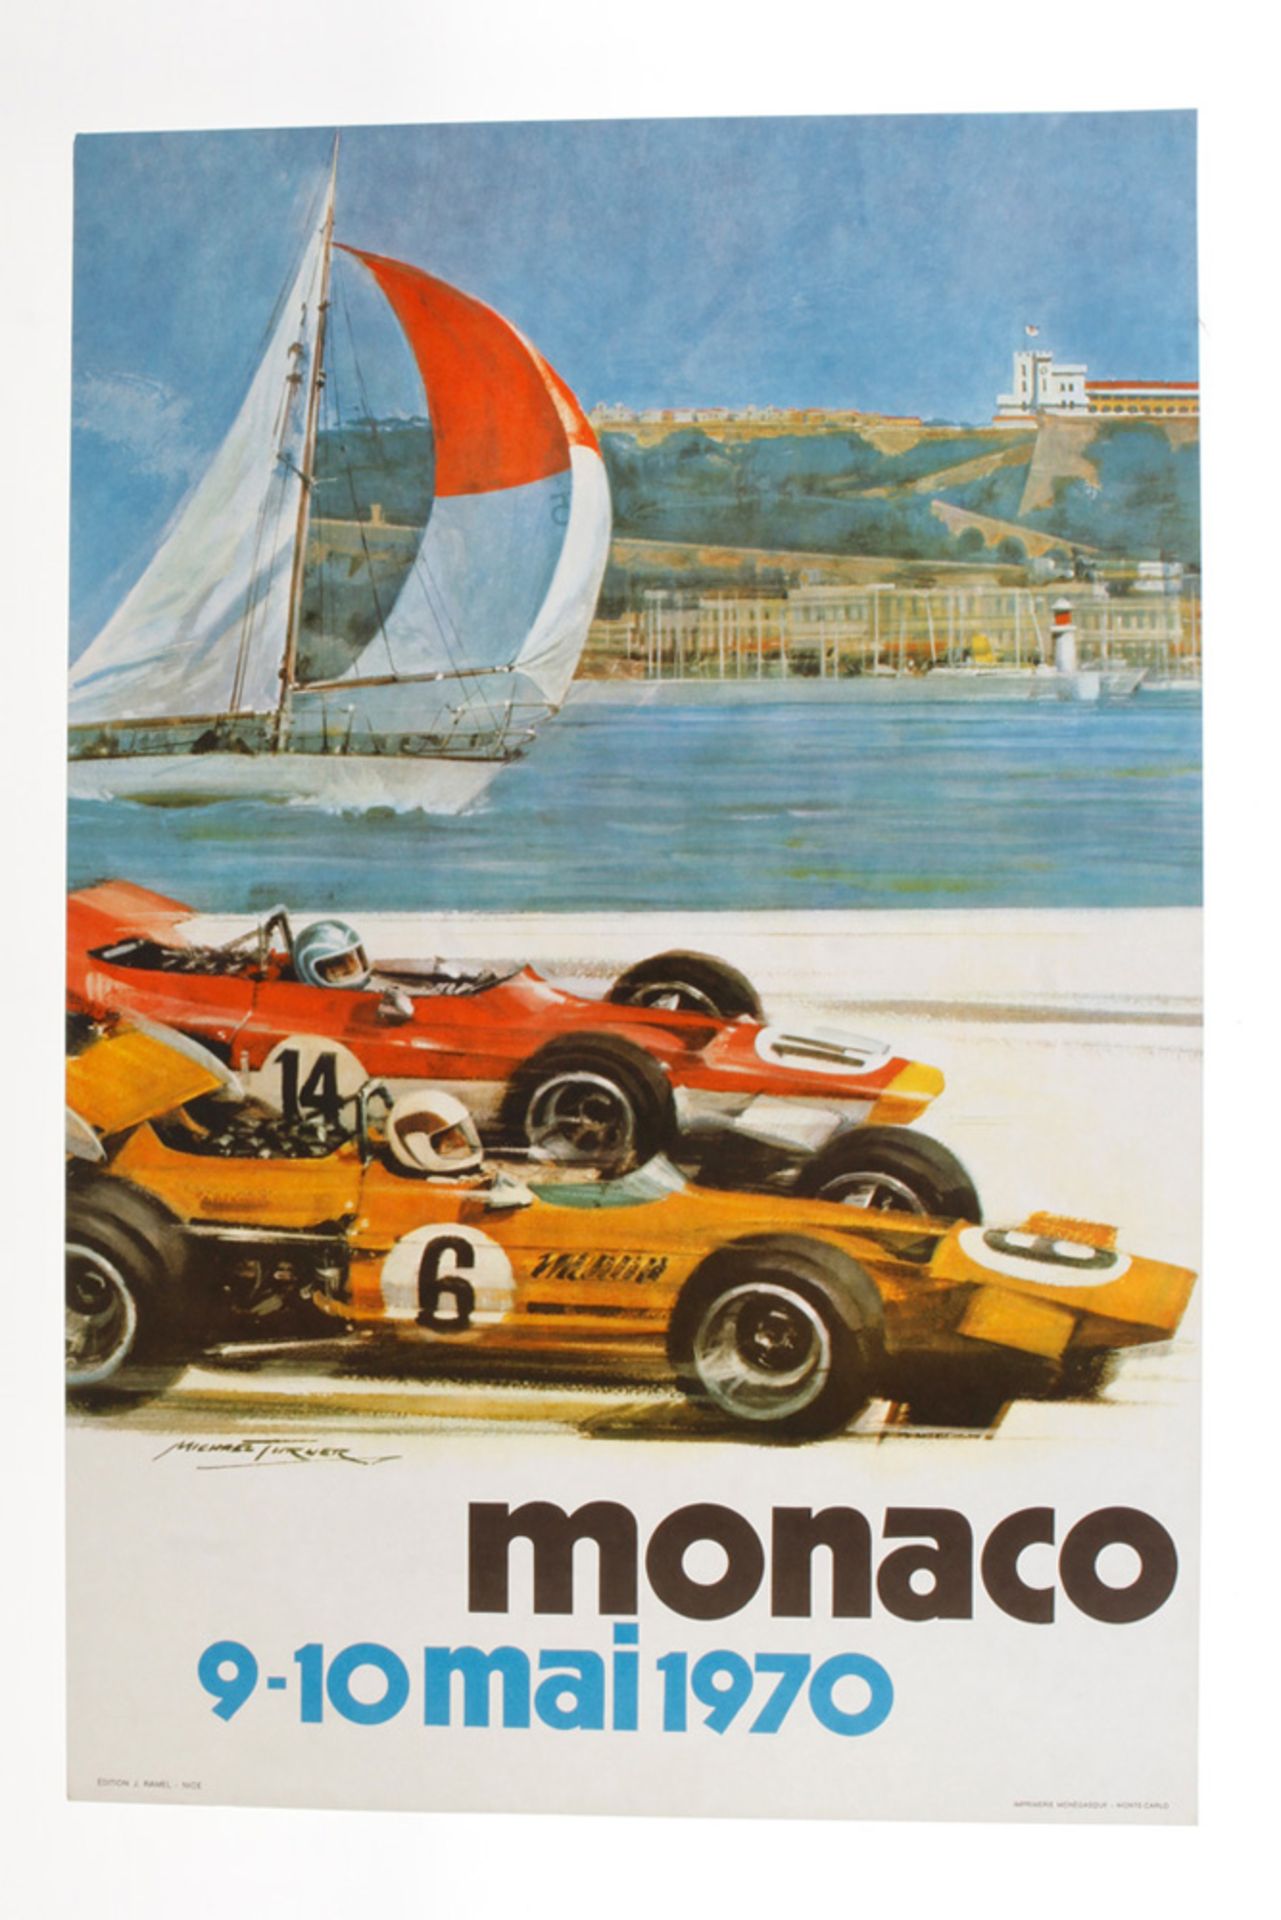 Orginal Rennplakat, Monaco 9-10 Mai 1970,  Michael Turner, Edition J. Ramel-Nice, Imprimerie